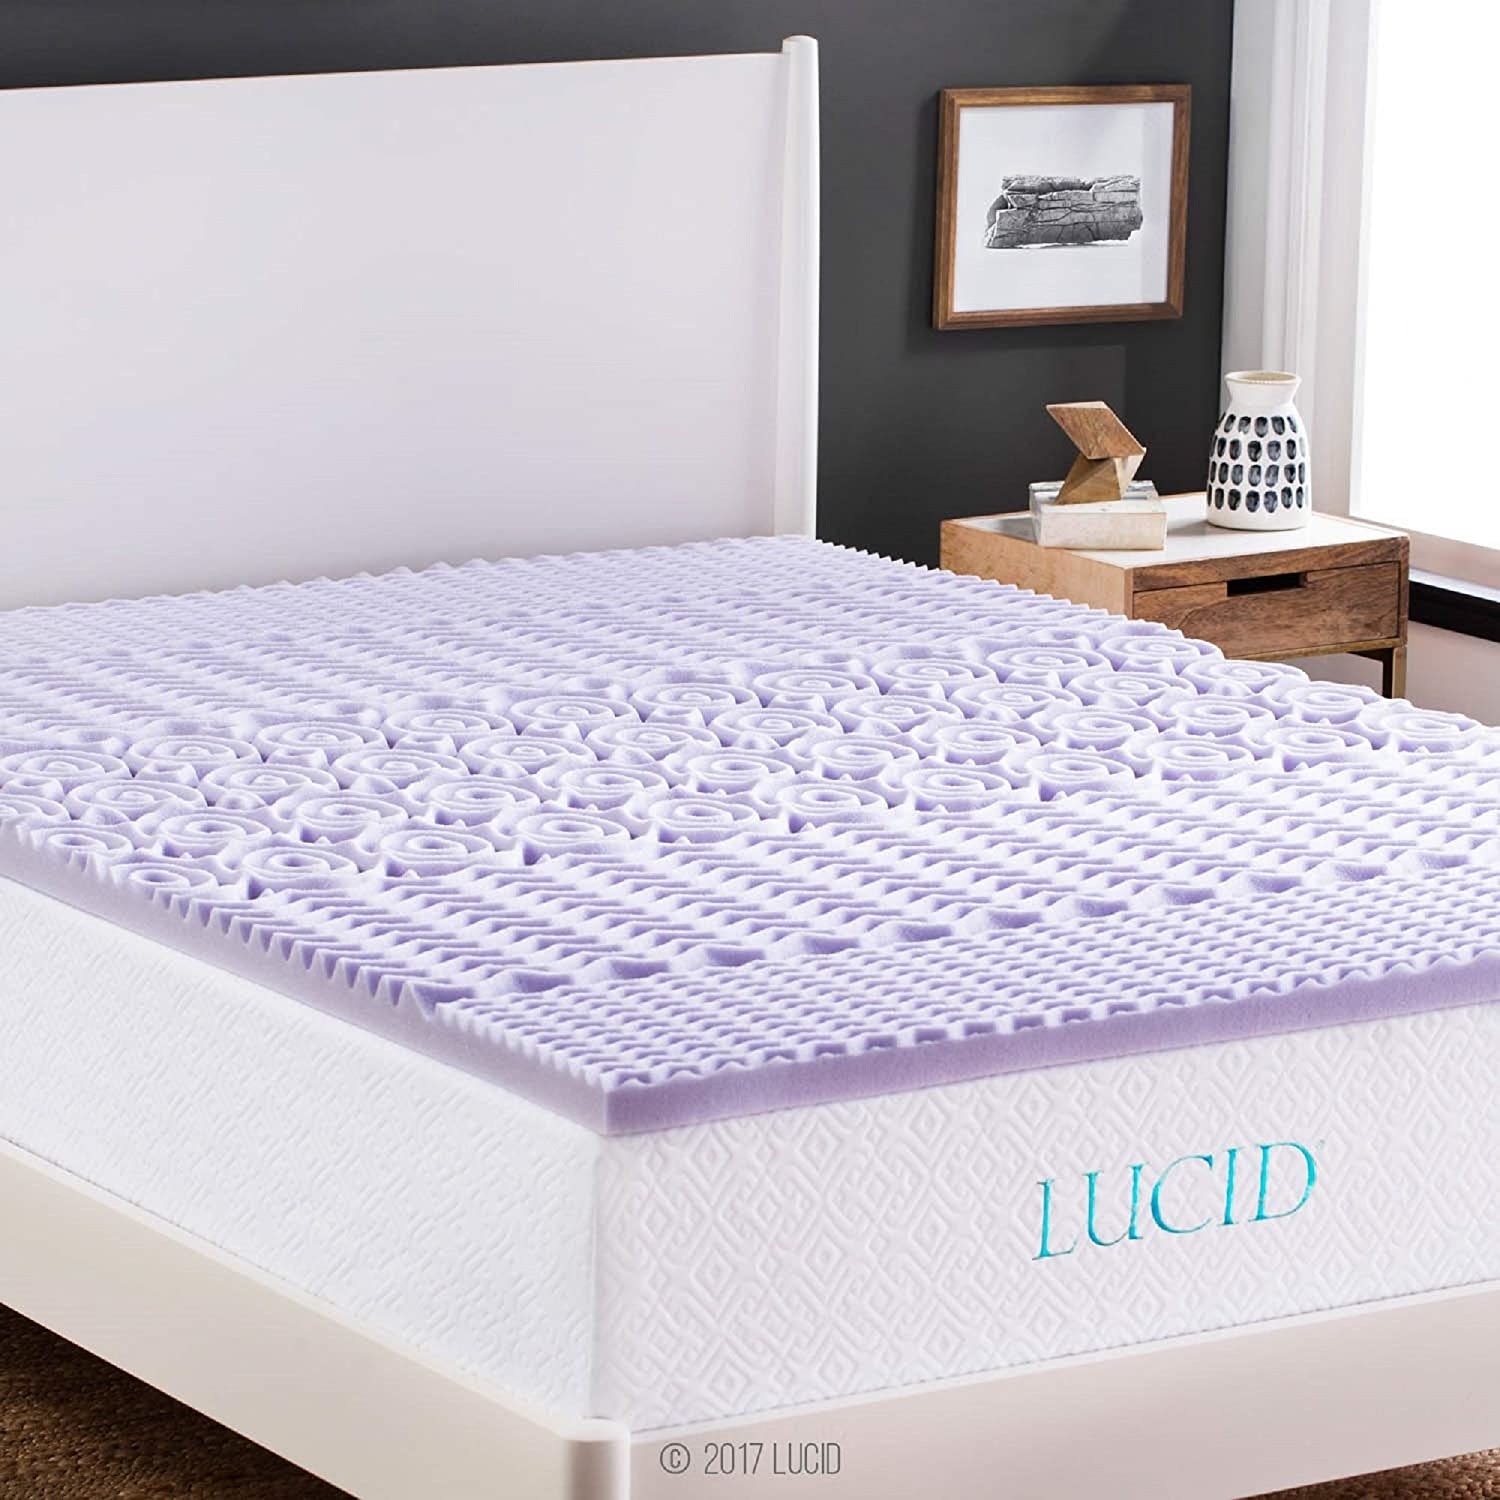 A thin foam mattress topper placed on top of a thick mattress